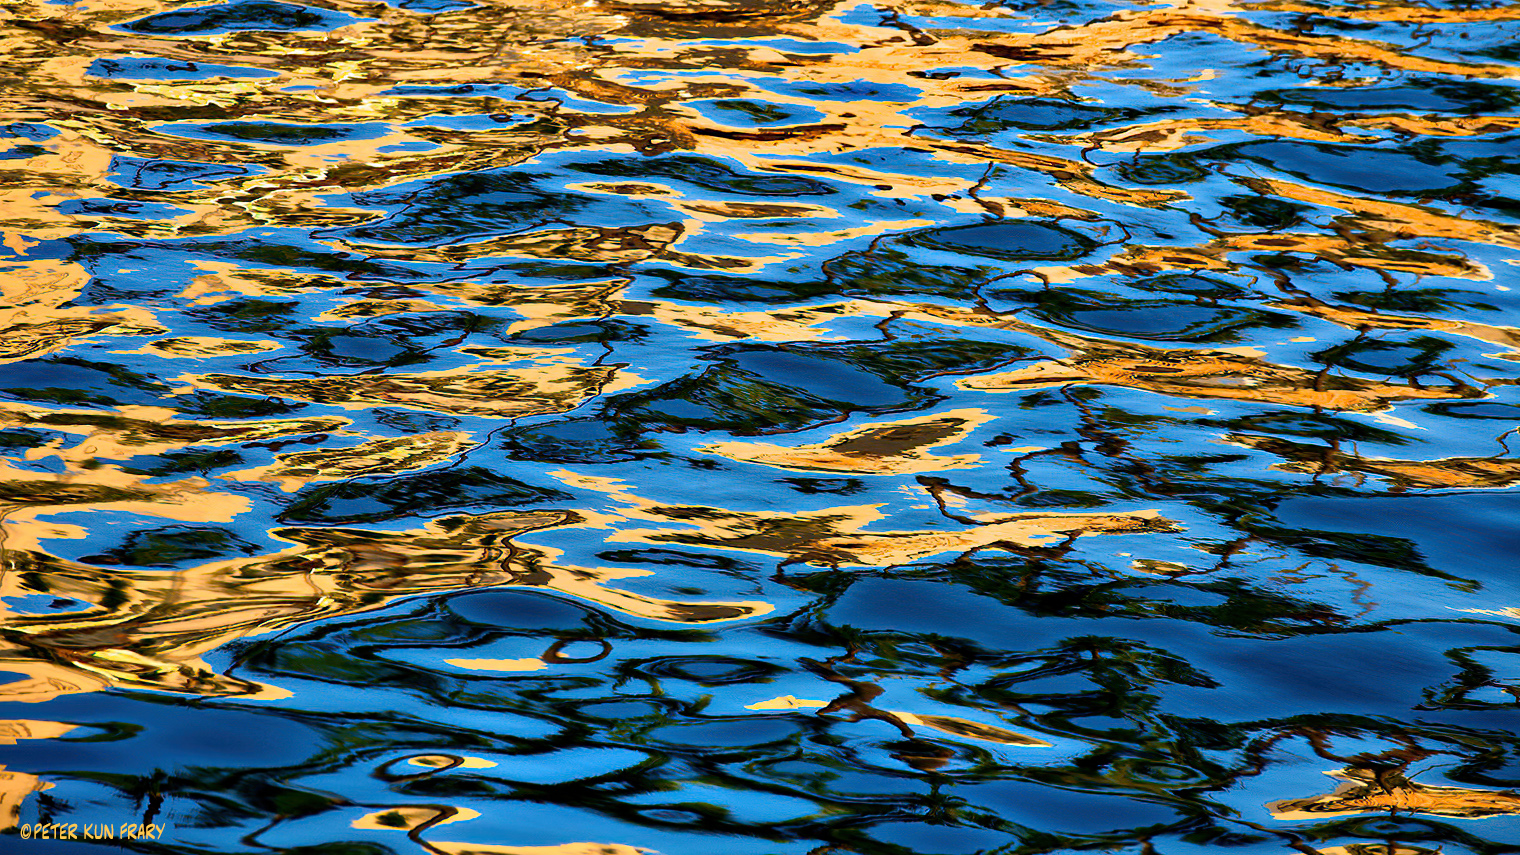 Waves | Dockside reflections at Aloha Tower | ©Peter Kun Frary